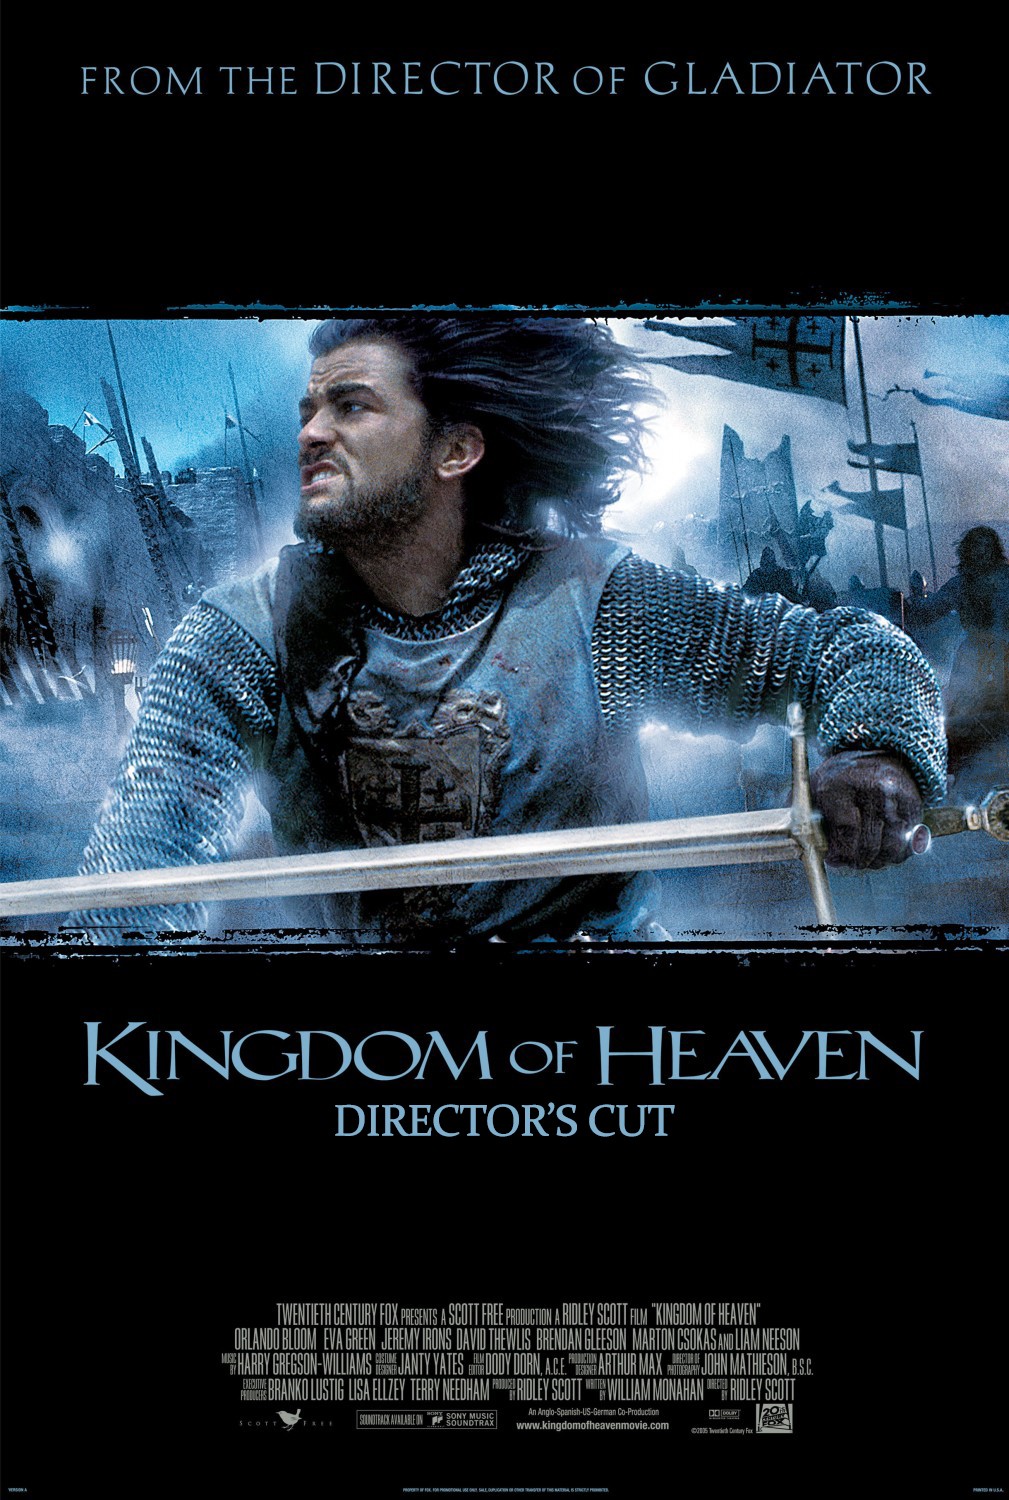 KINGDOM OF HEAVEN - DIRECTOR'S CUT